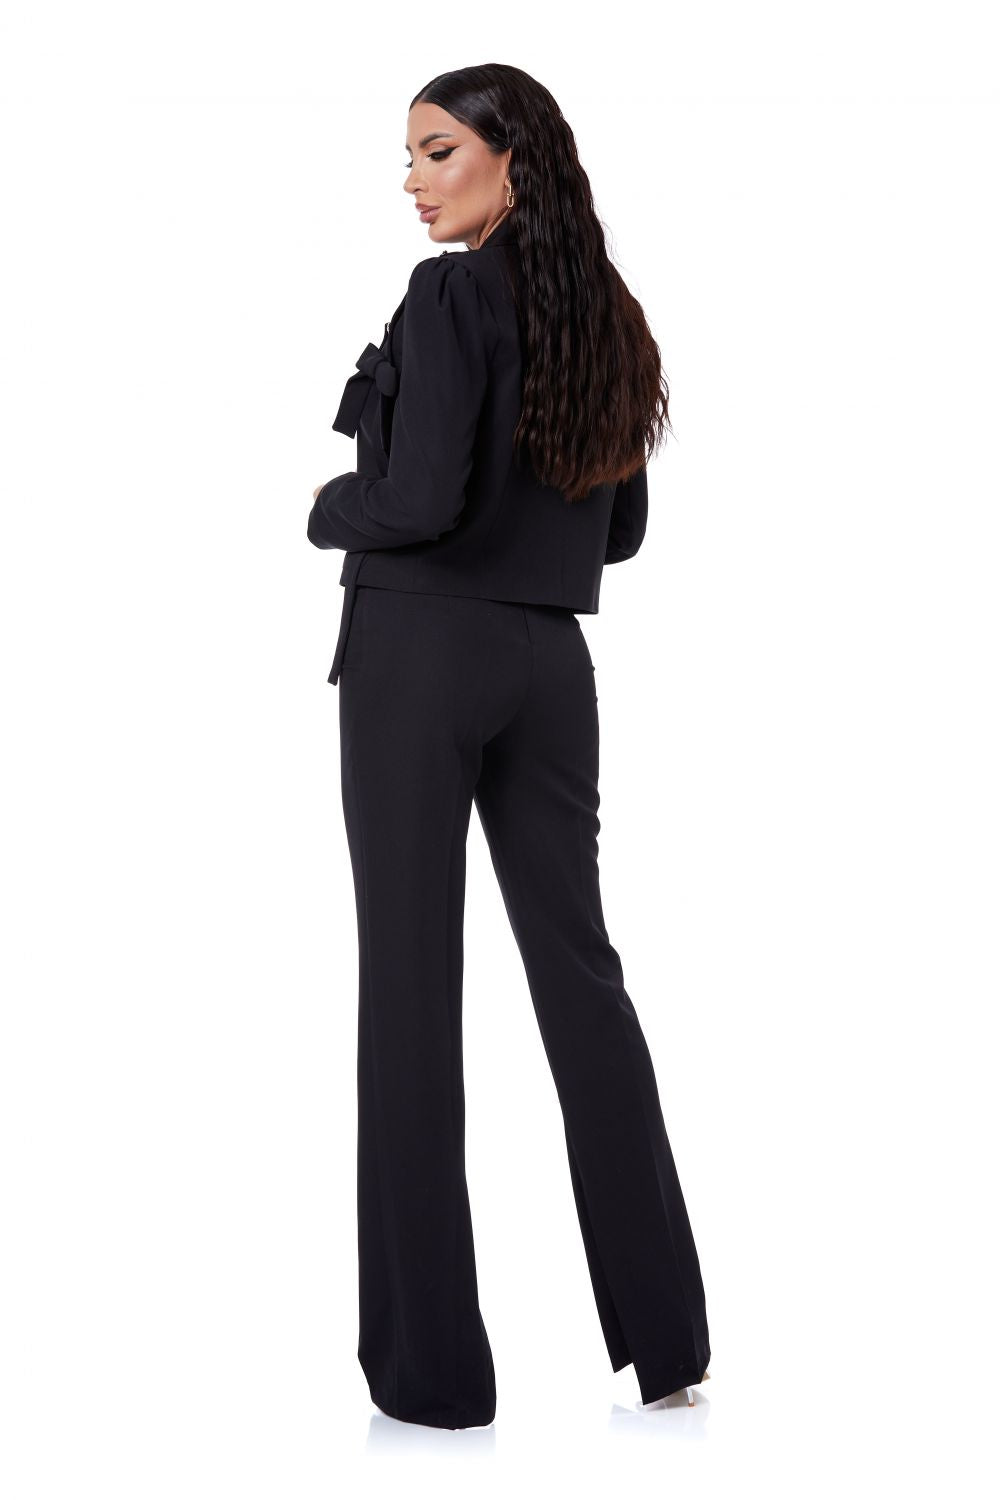 Black elegant women's suit Arnis Bogas